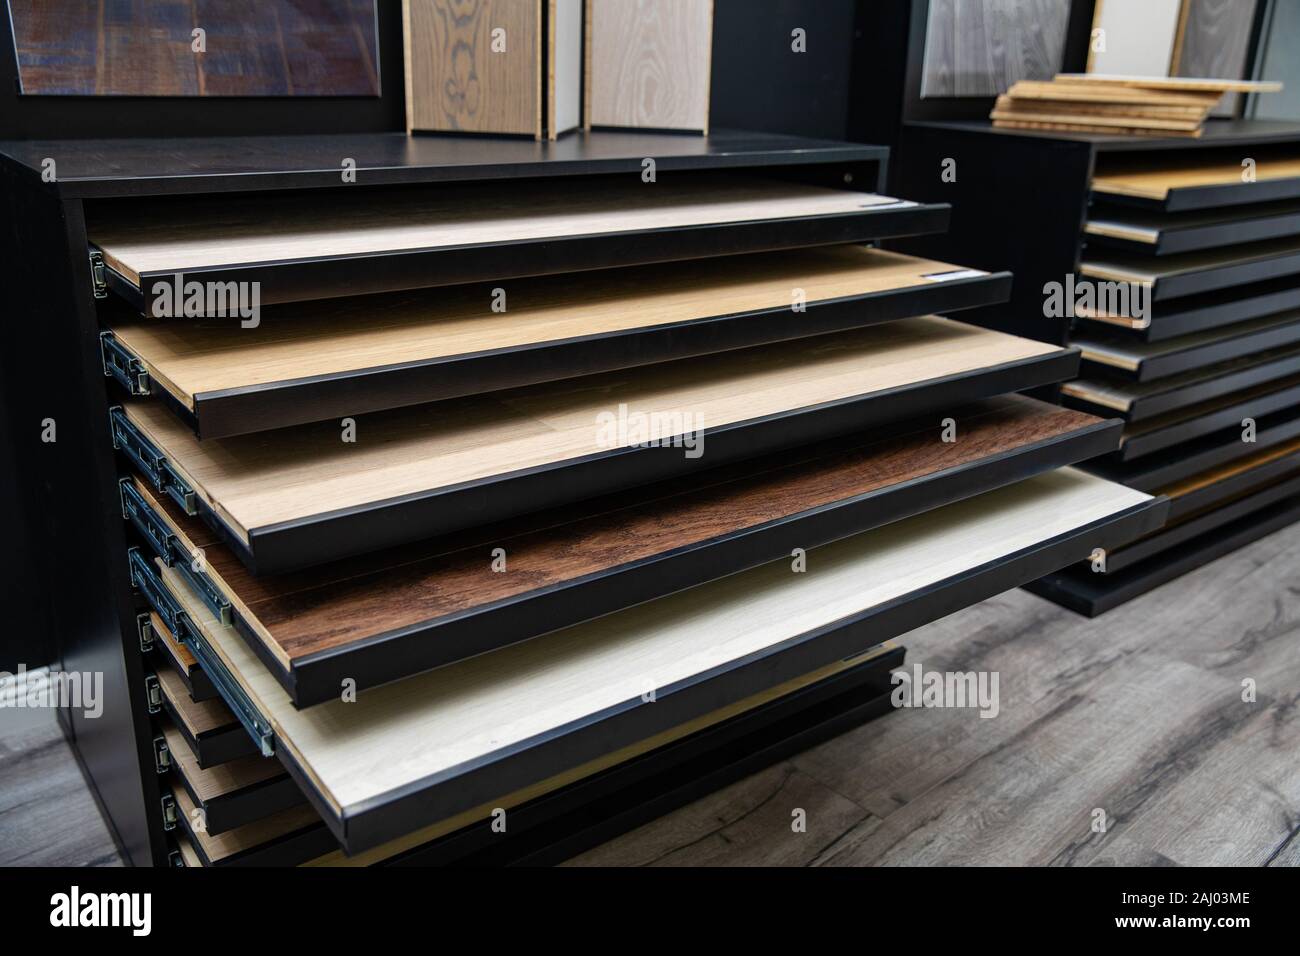 furniture and flooring material samples at interior design shop Stock Photo